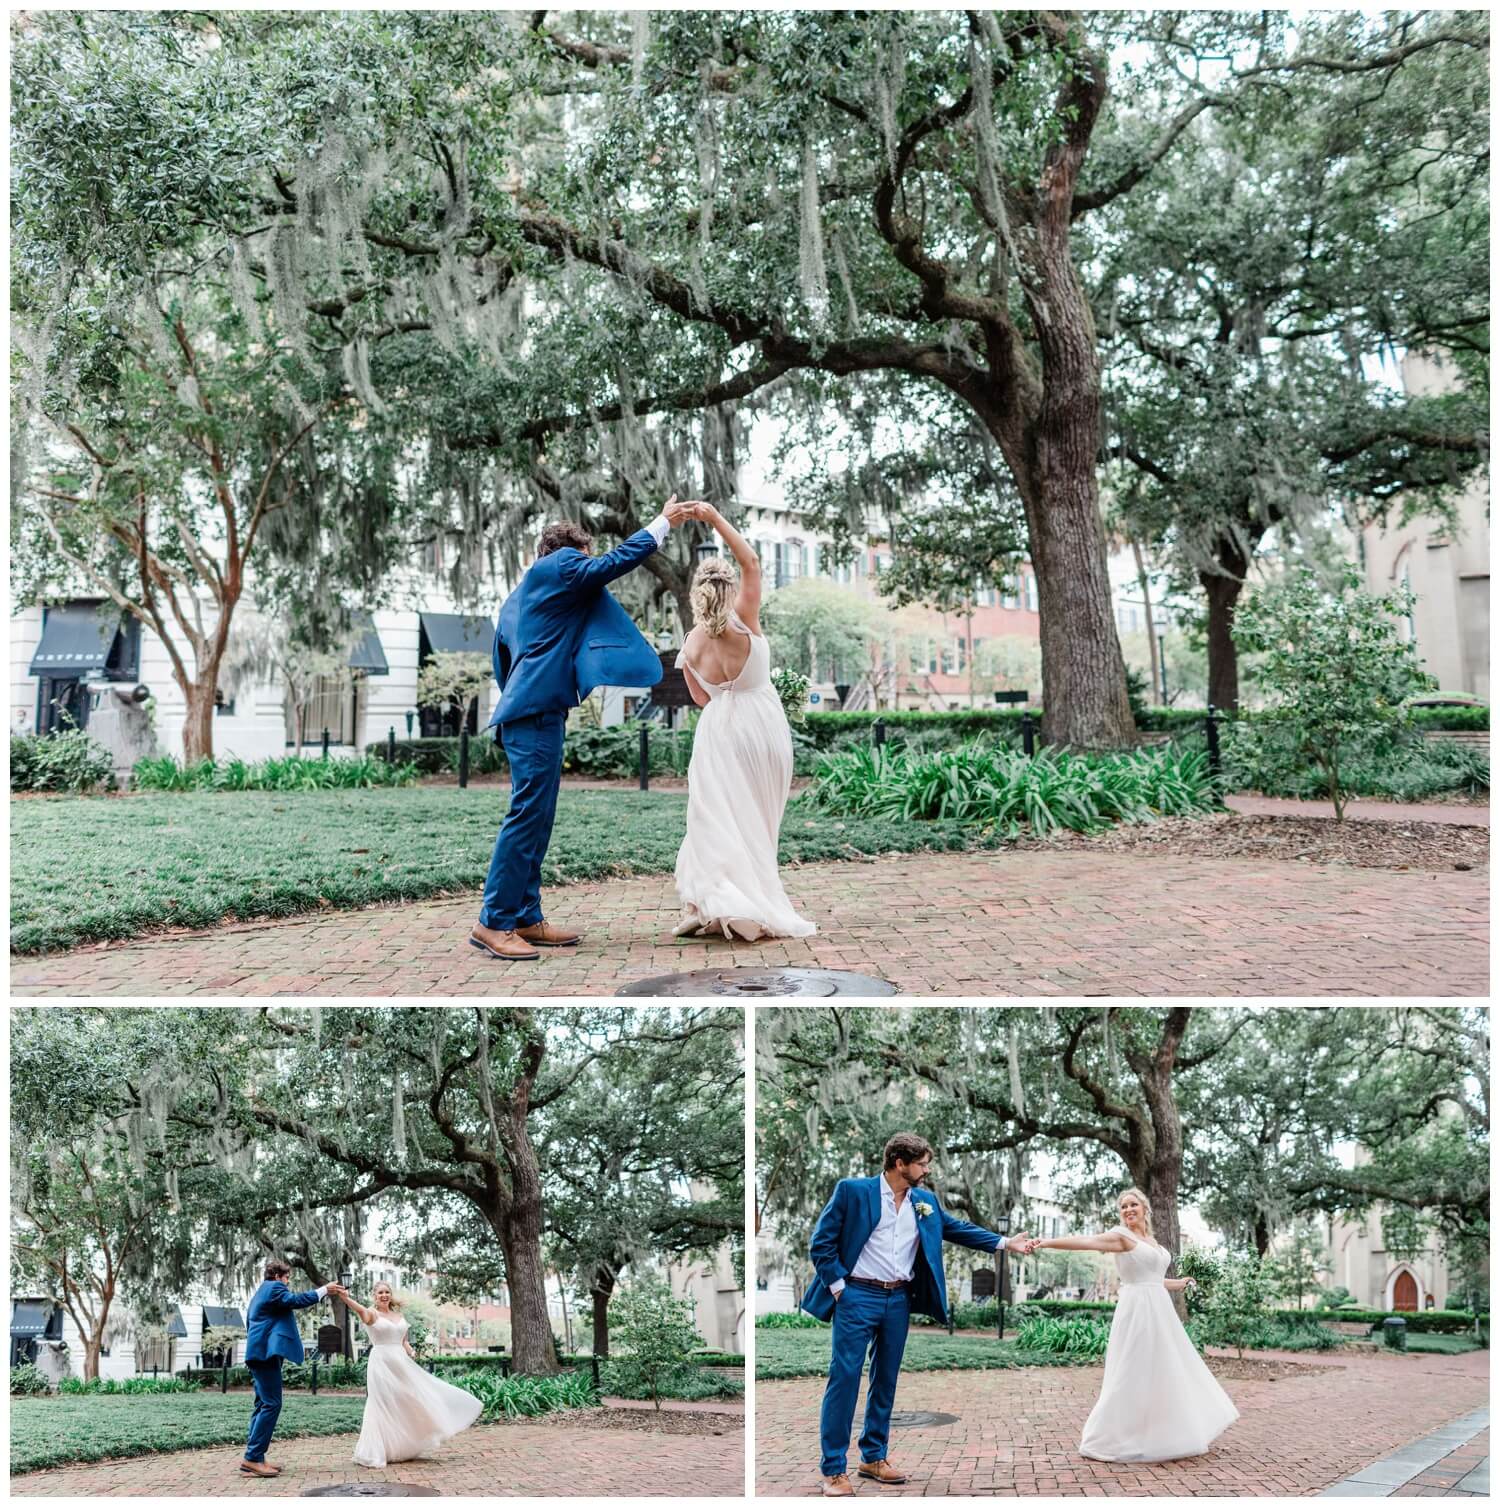 Dancing in a Savannah square - The Savannah Elopement Package